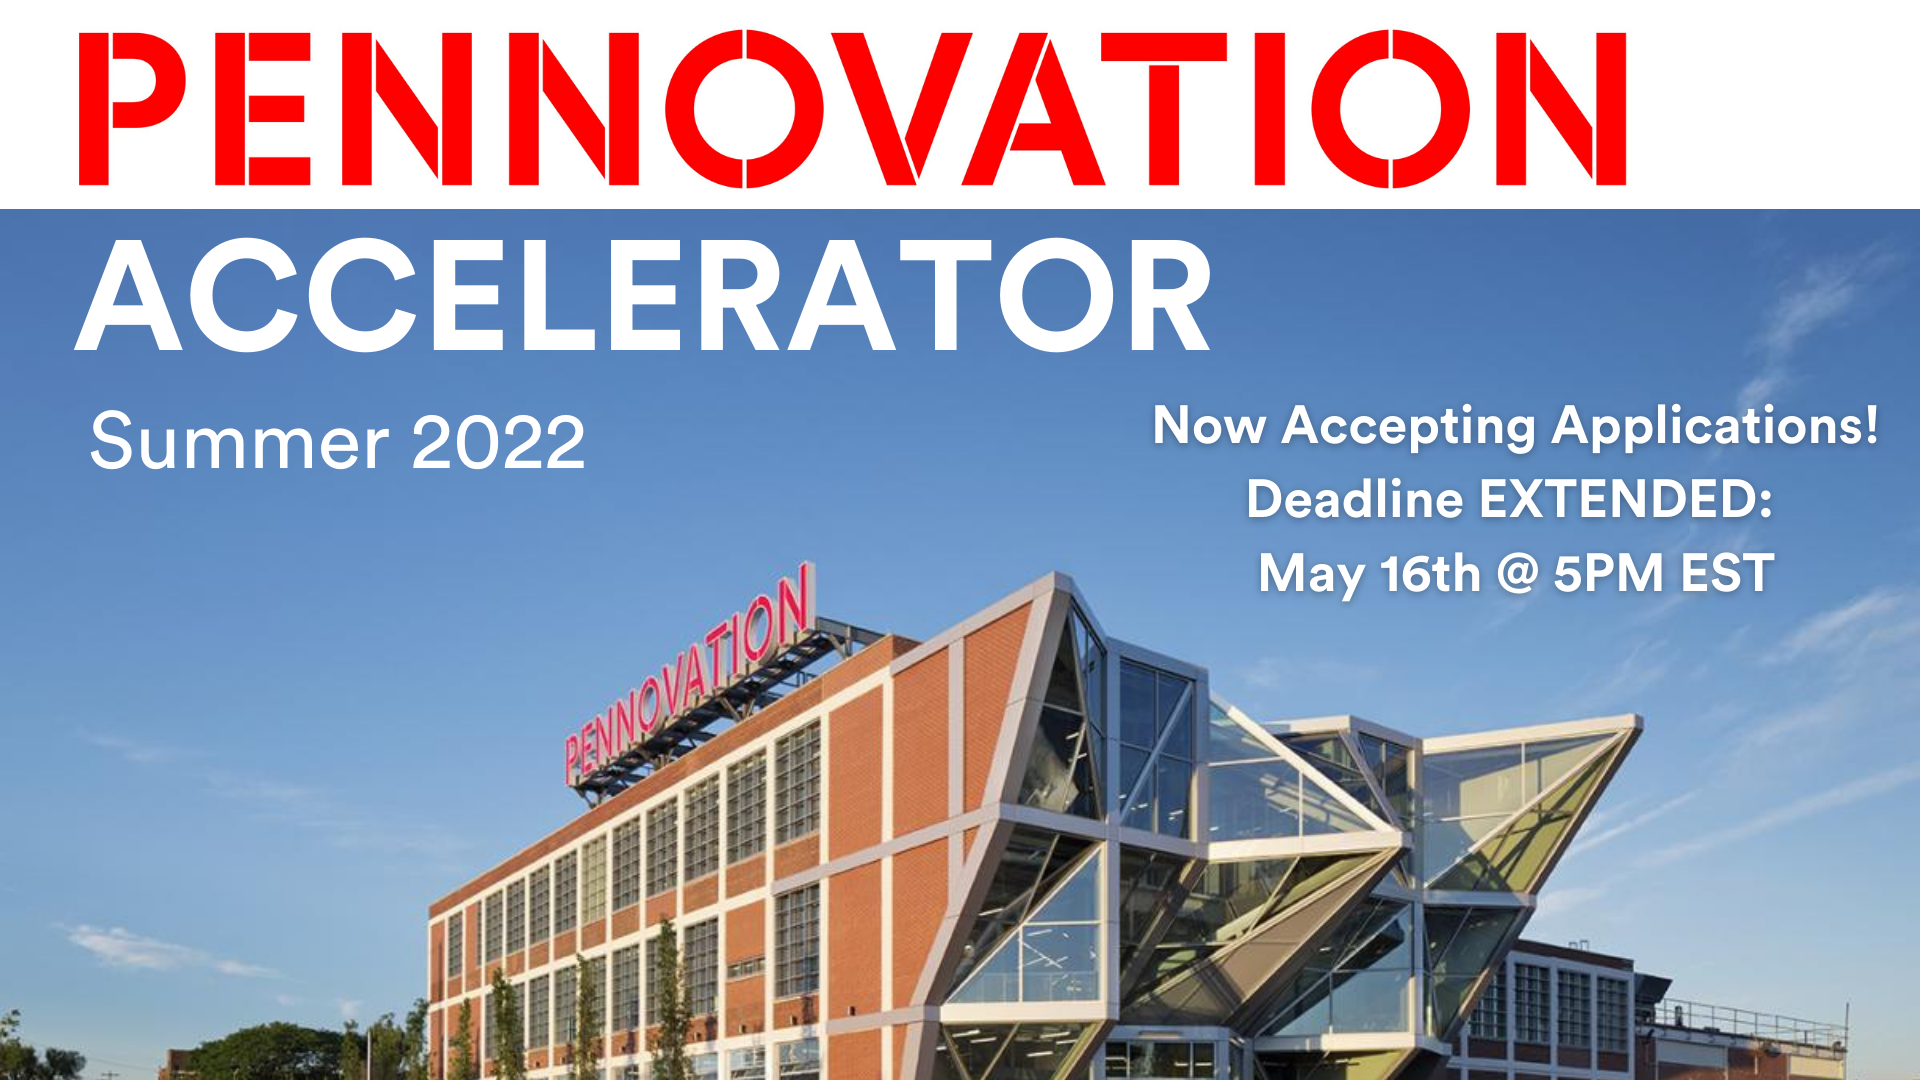 Pennovation Accelerator Application Deadline extension 